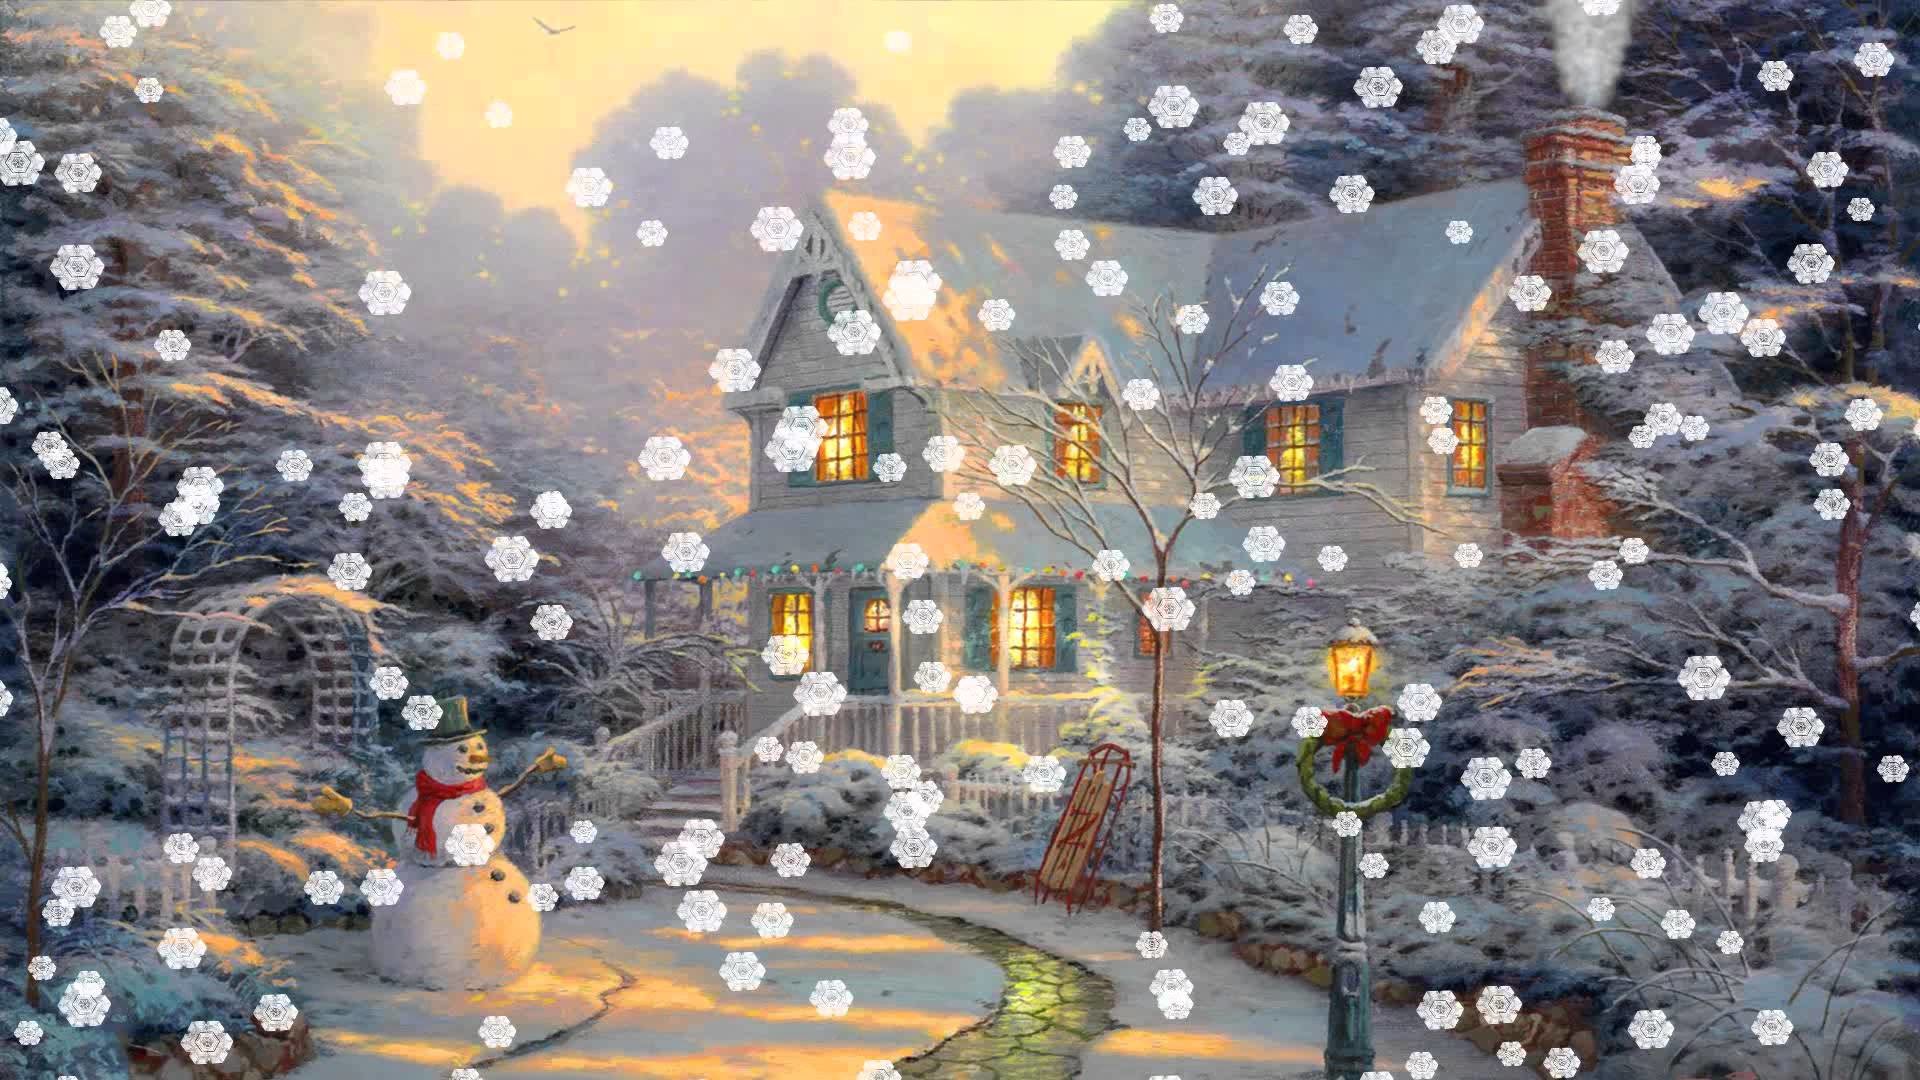 1920x1080 Christmas Eve Animated Wallpaper http://www.desktopanimated.com